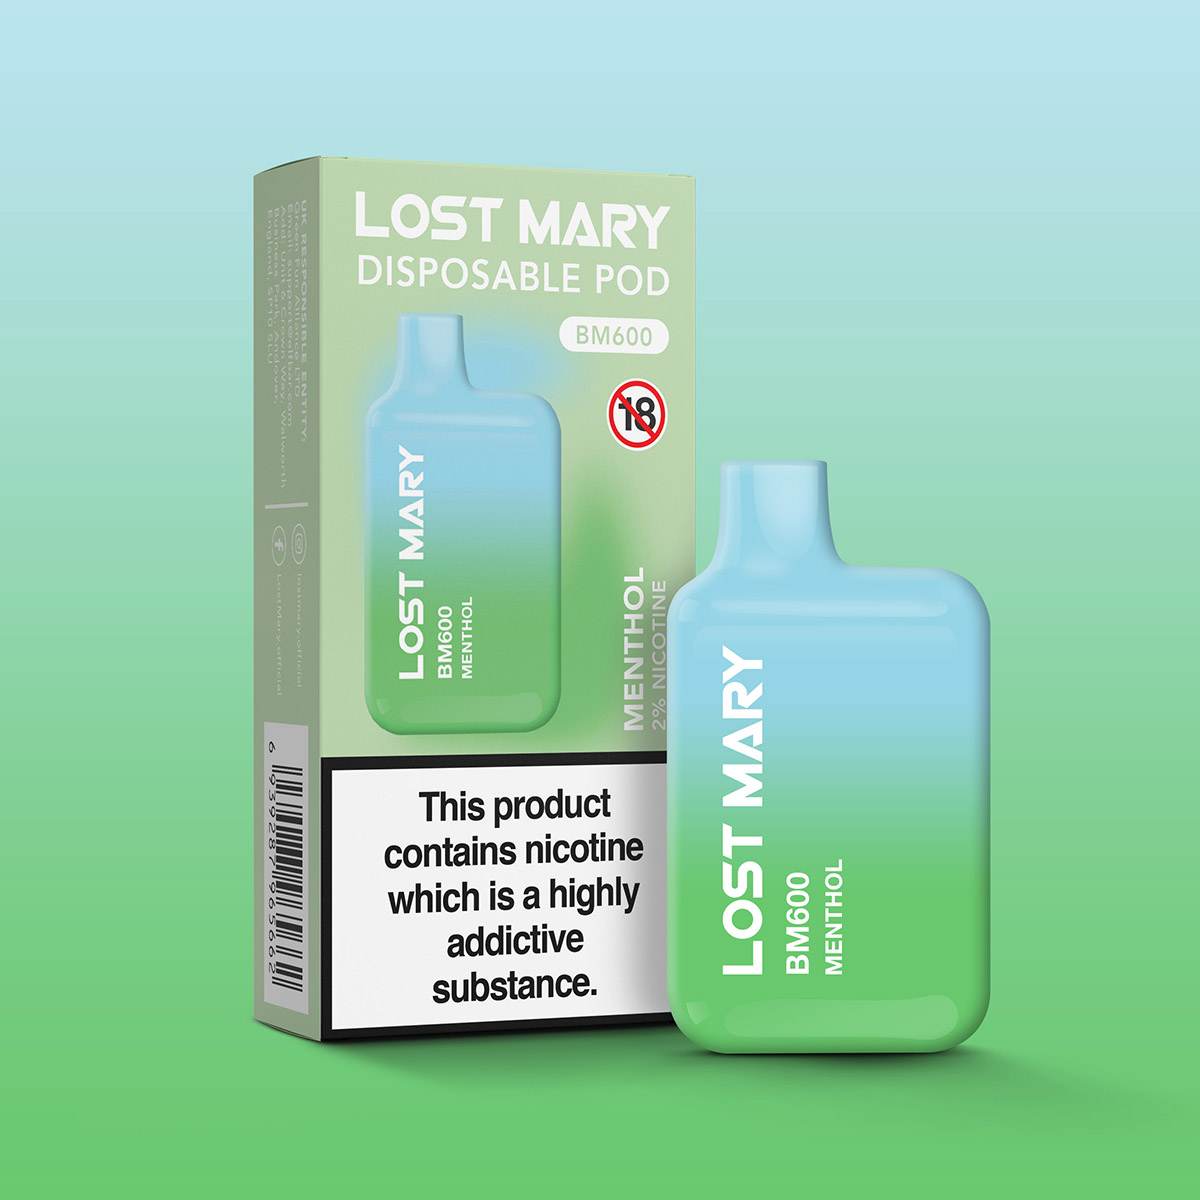 Lost Mary BM600 Menthol Disposable Vape